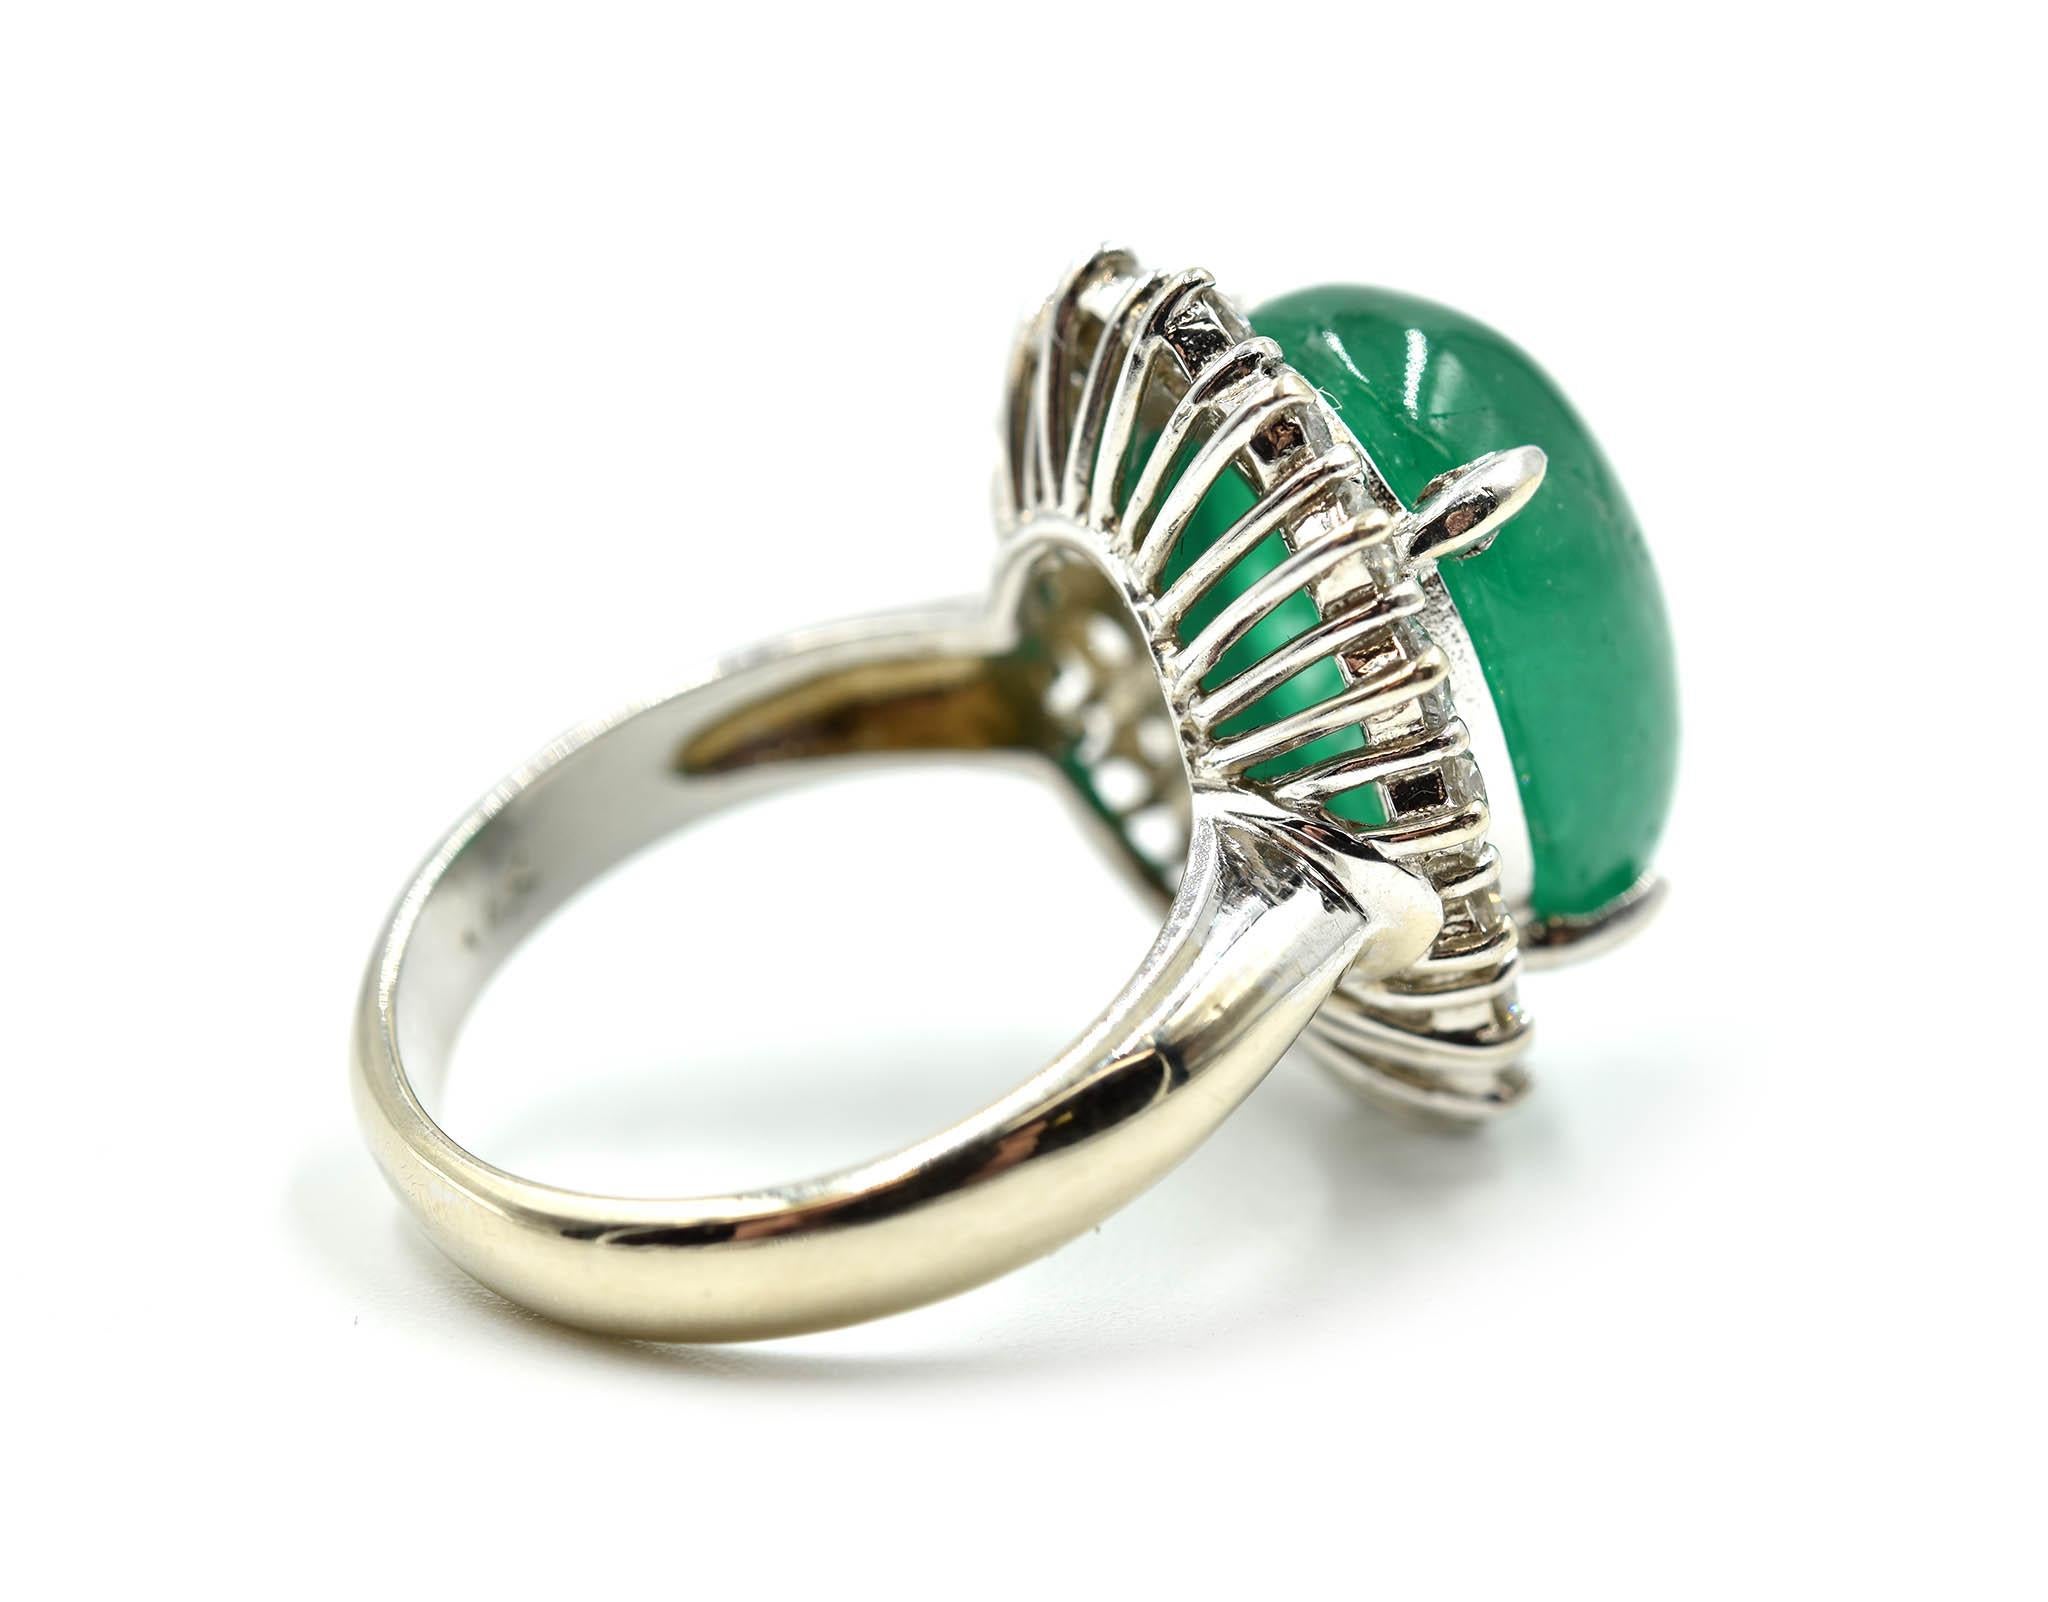 Women's 10.33 Carat Cabochon Cut Emerald Gemstone with Diamond Halo Ring